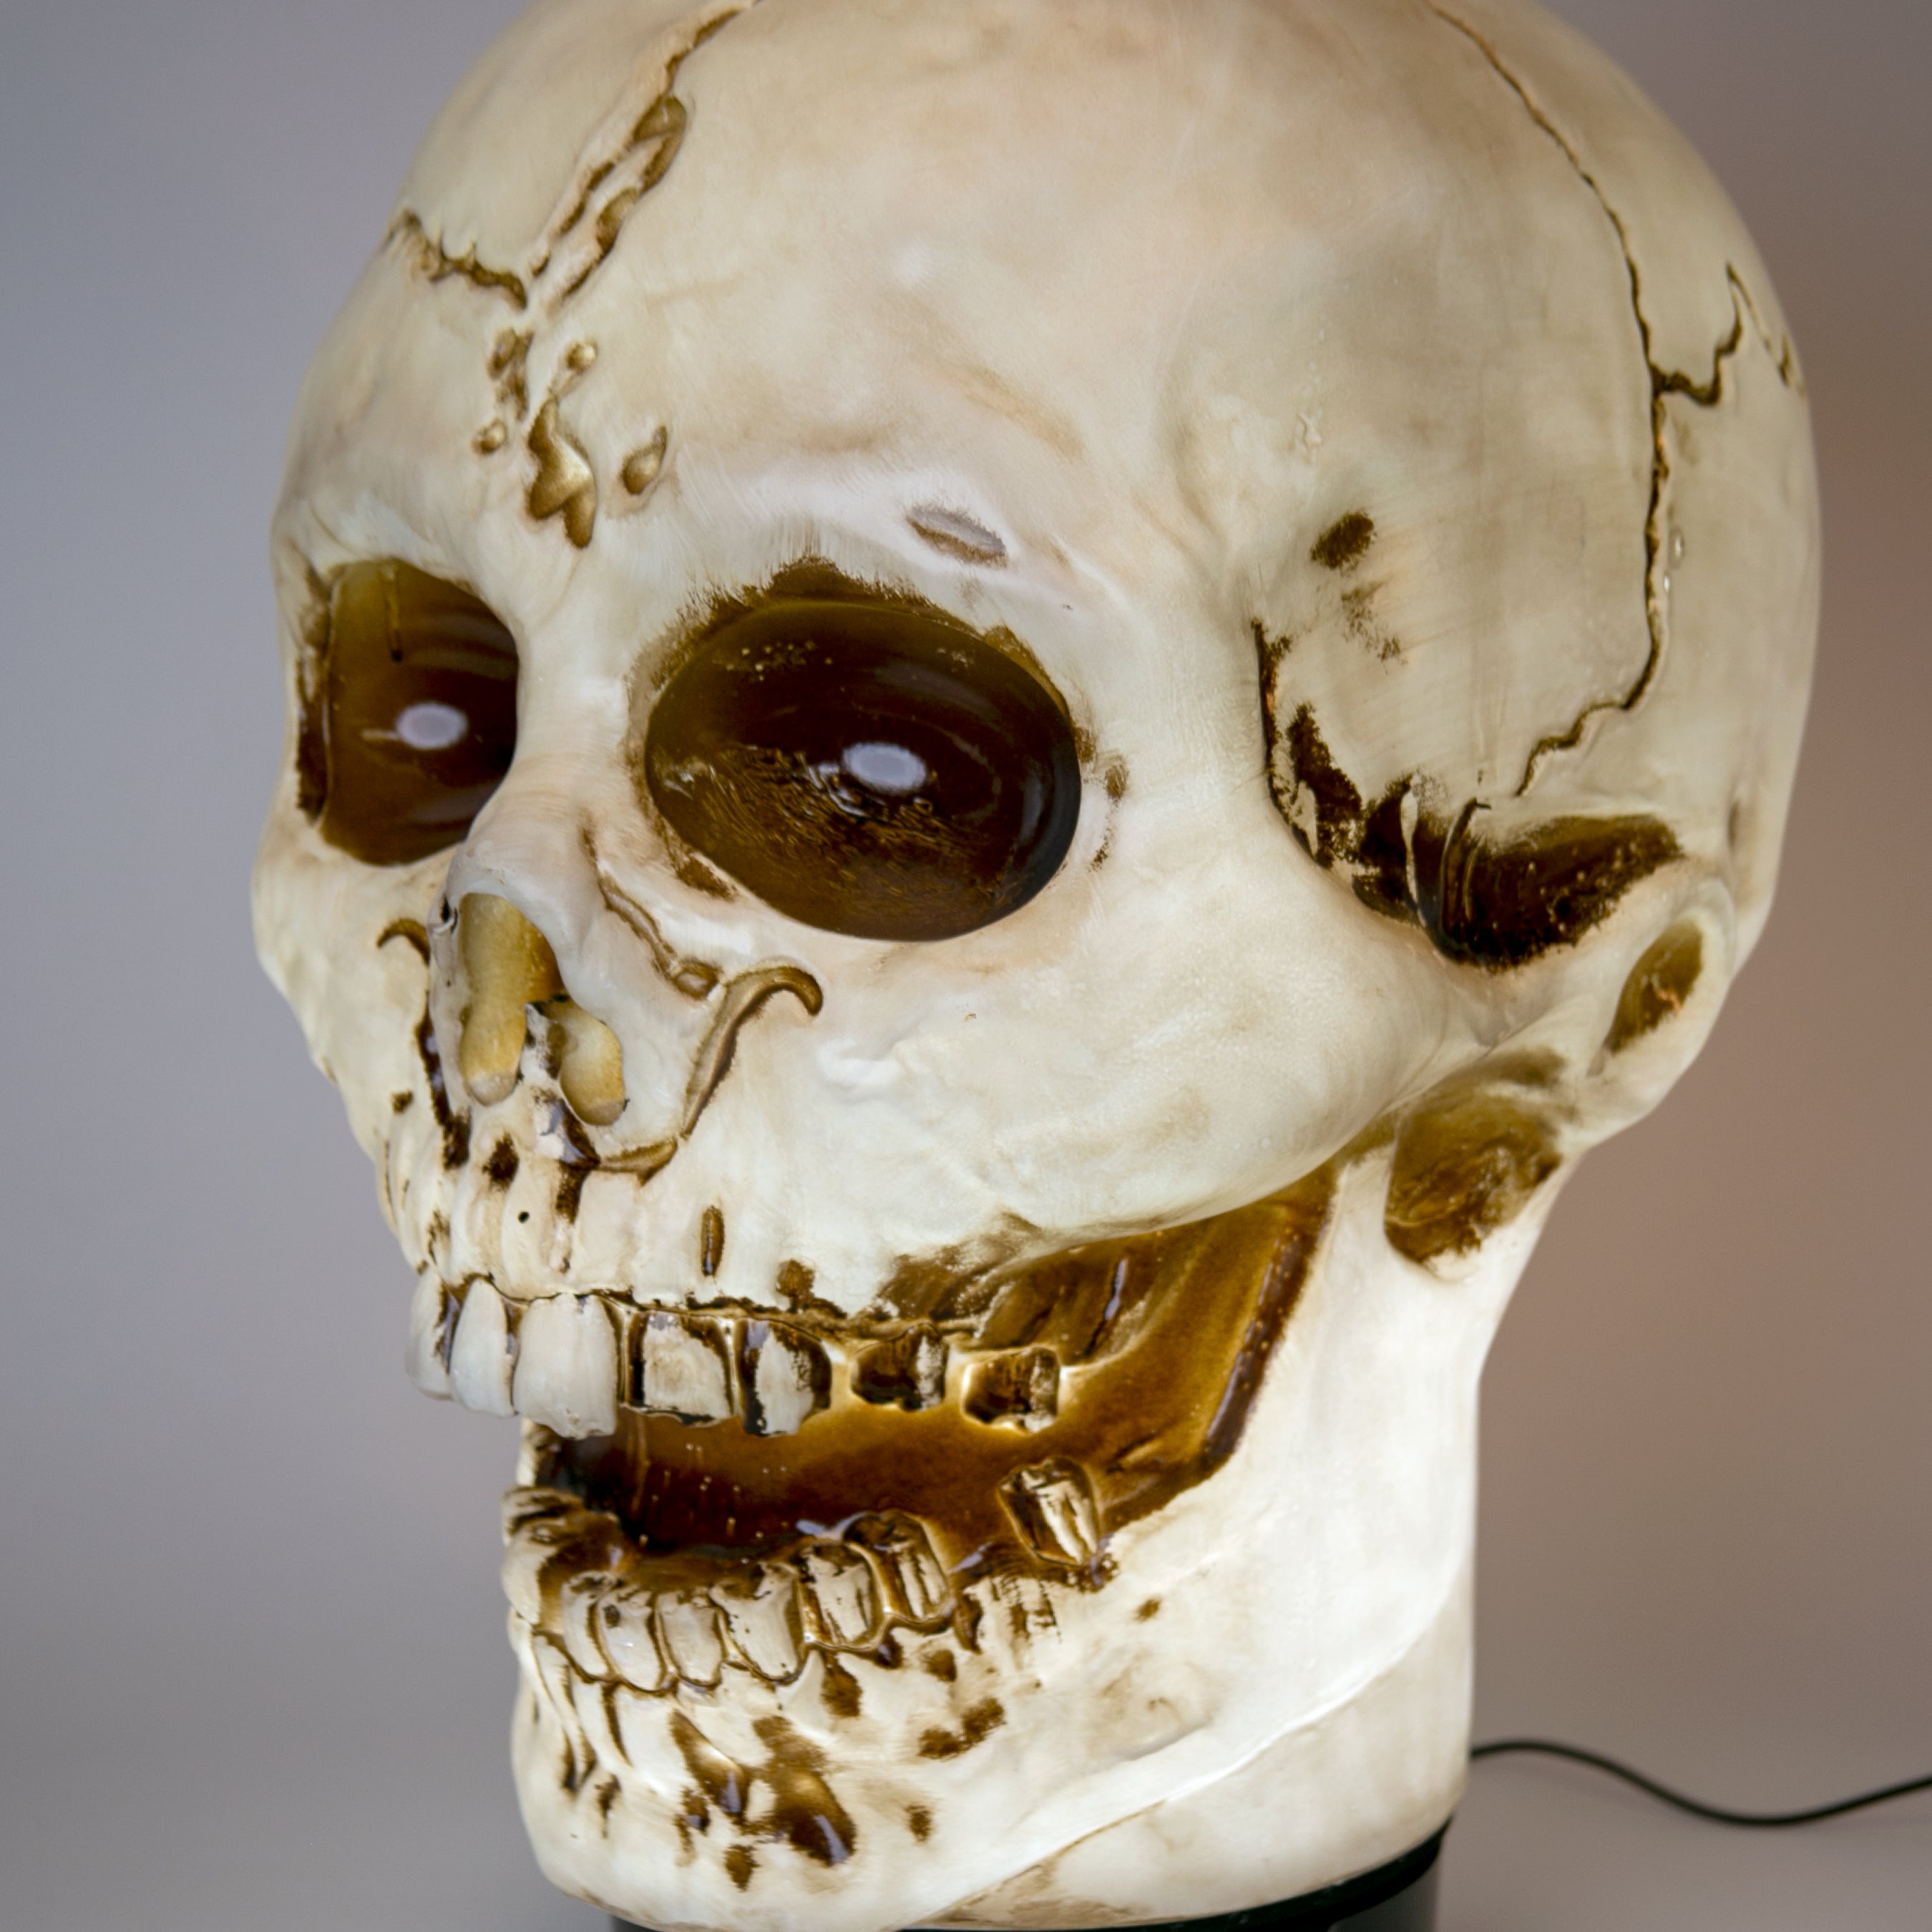 Giant Skull Animatronic Prop 20-Inch-Tall Halloween Decoration